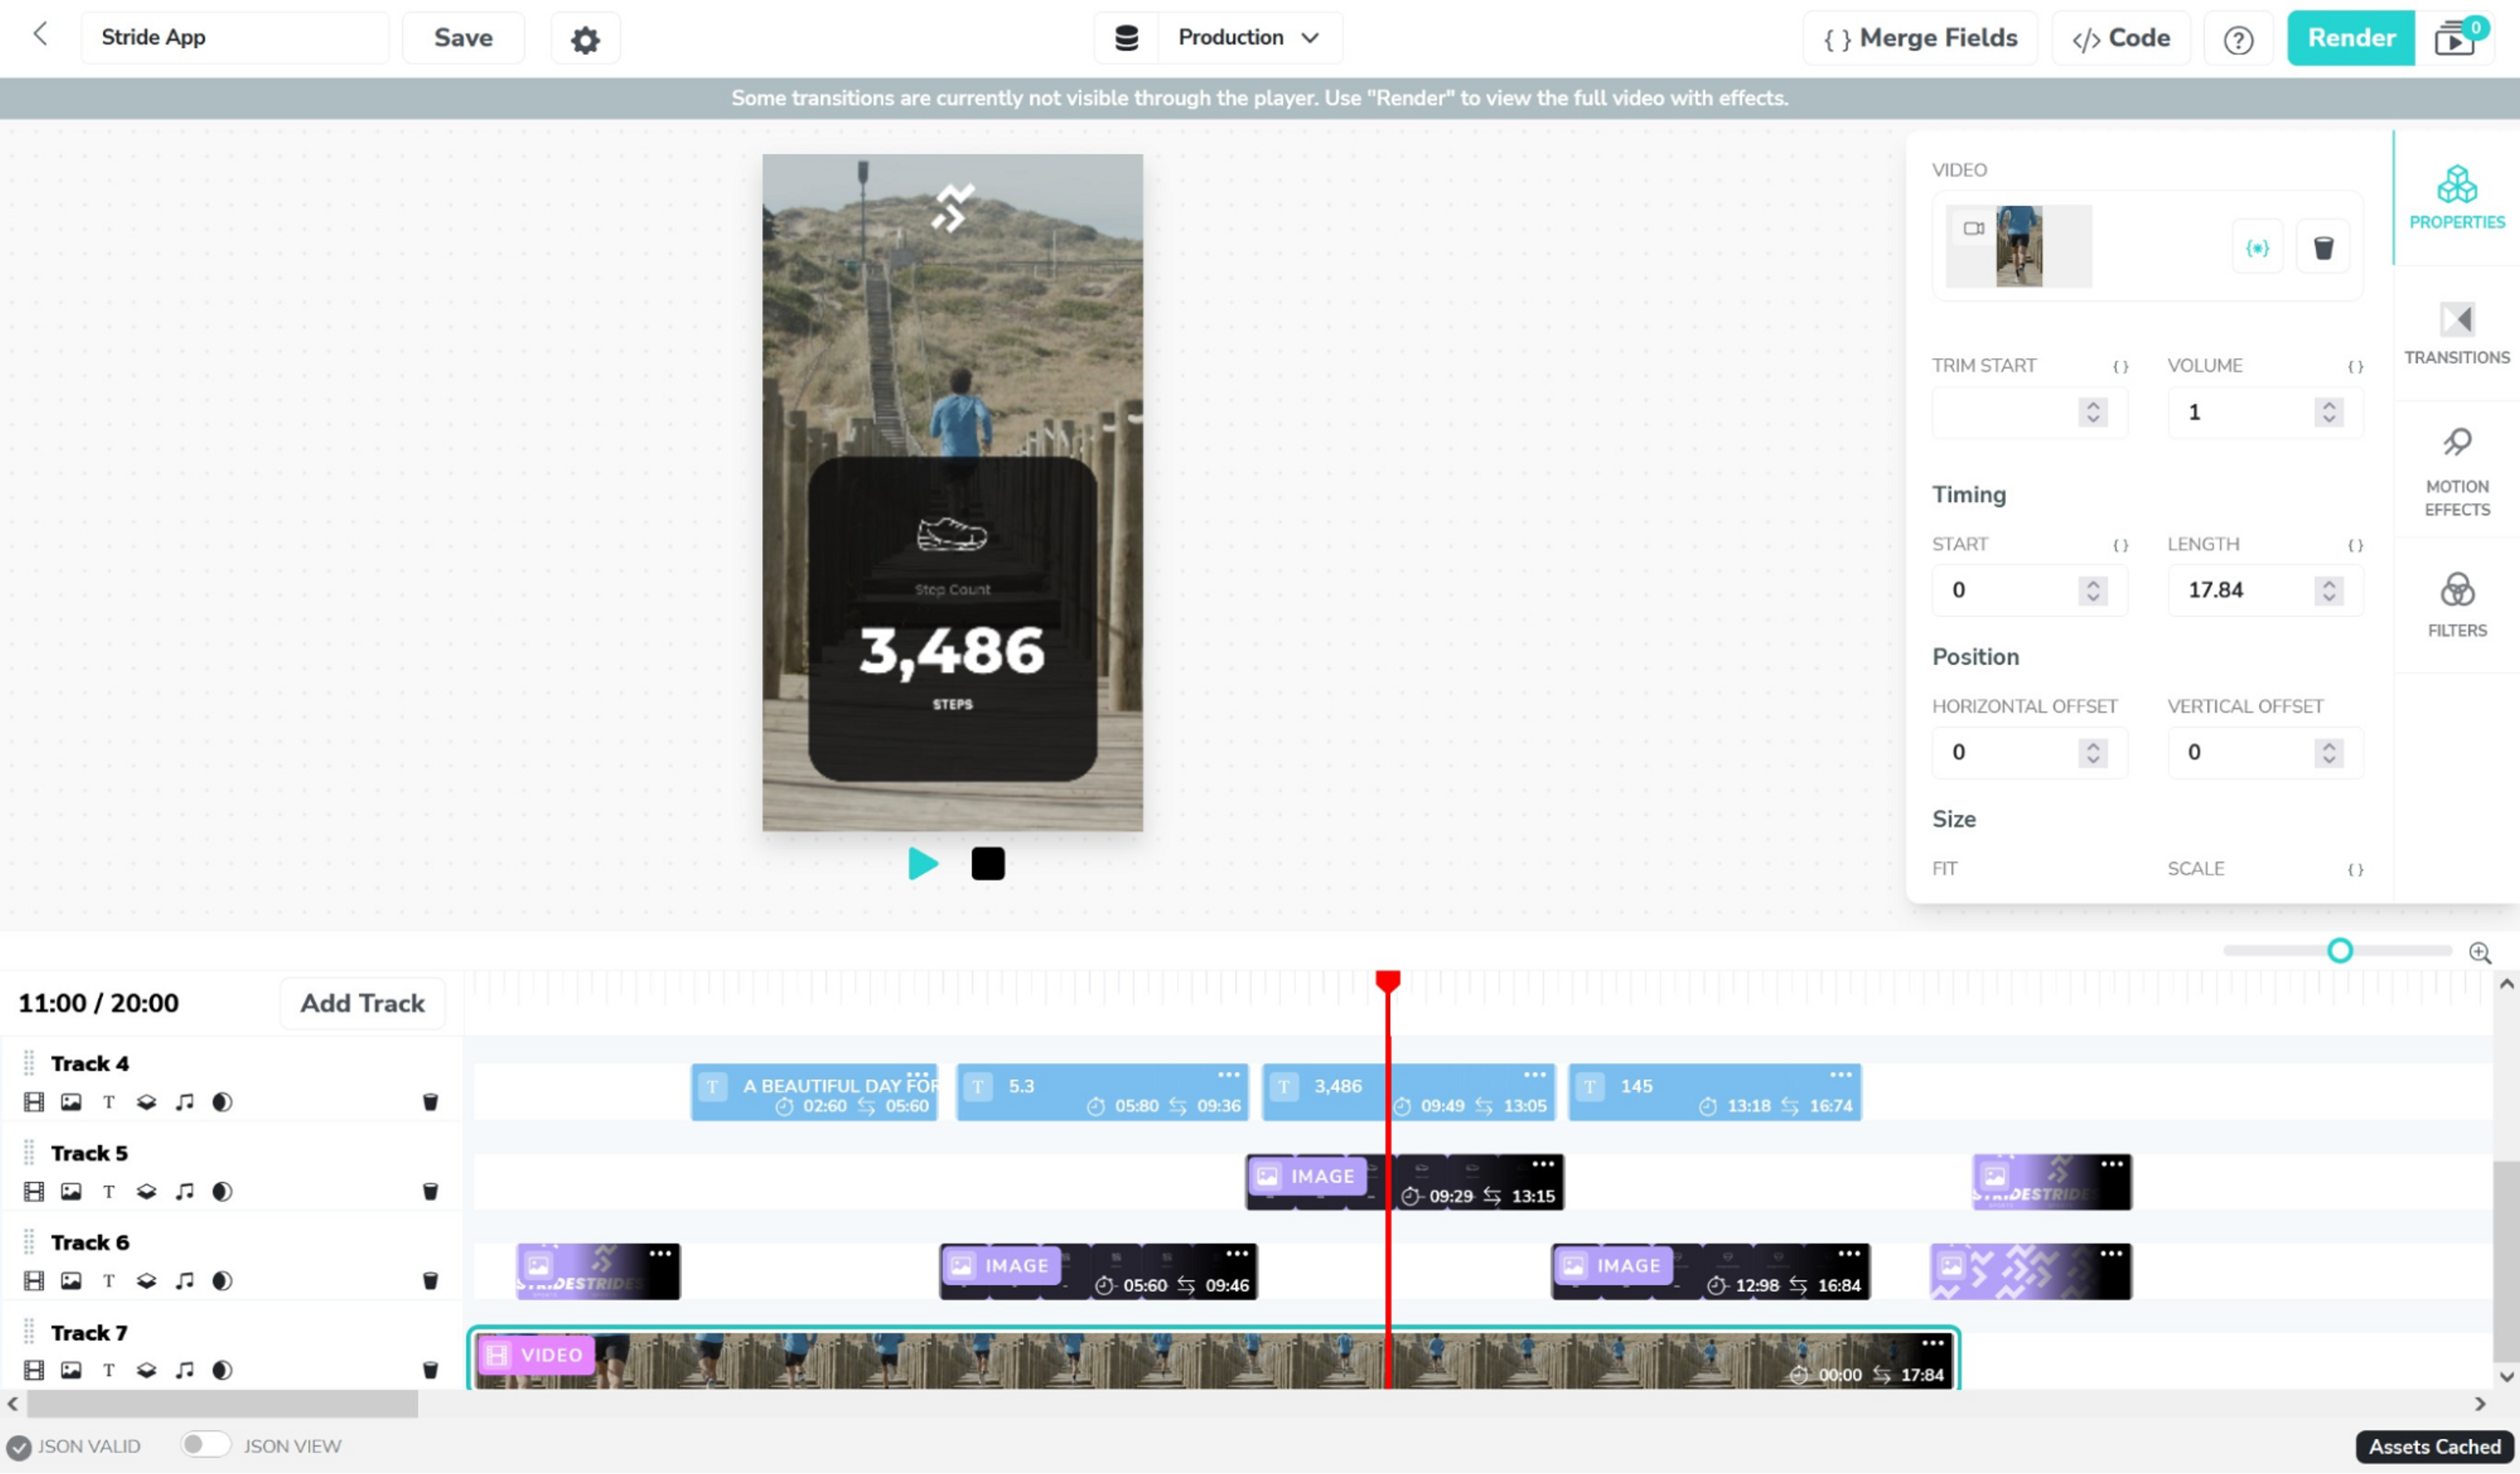 A screenshot showing the Shotstack editing user interface